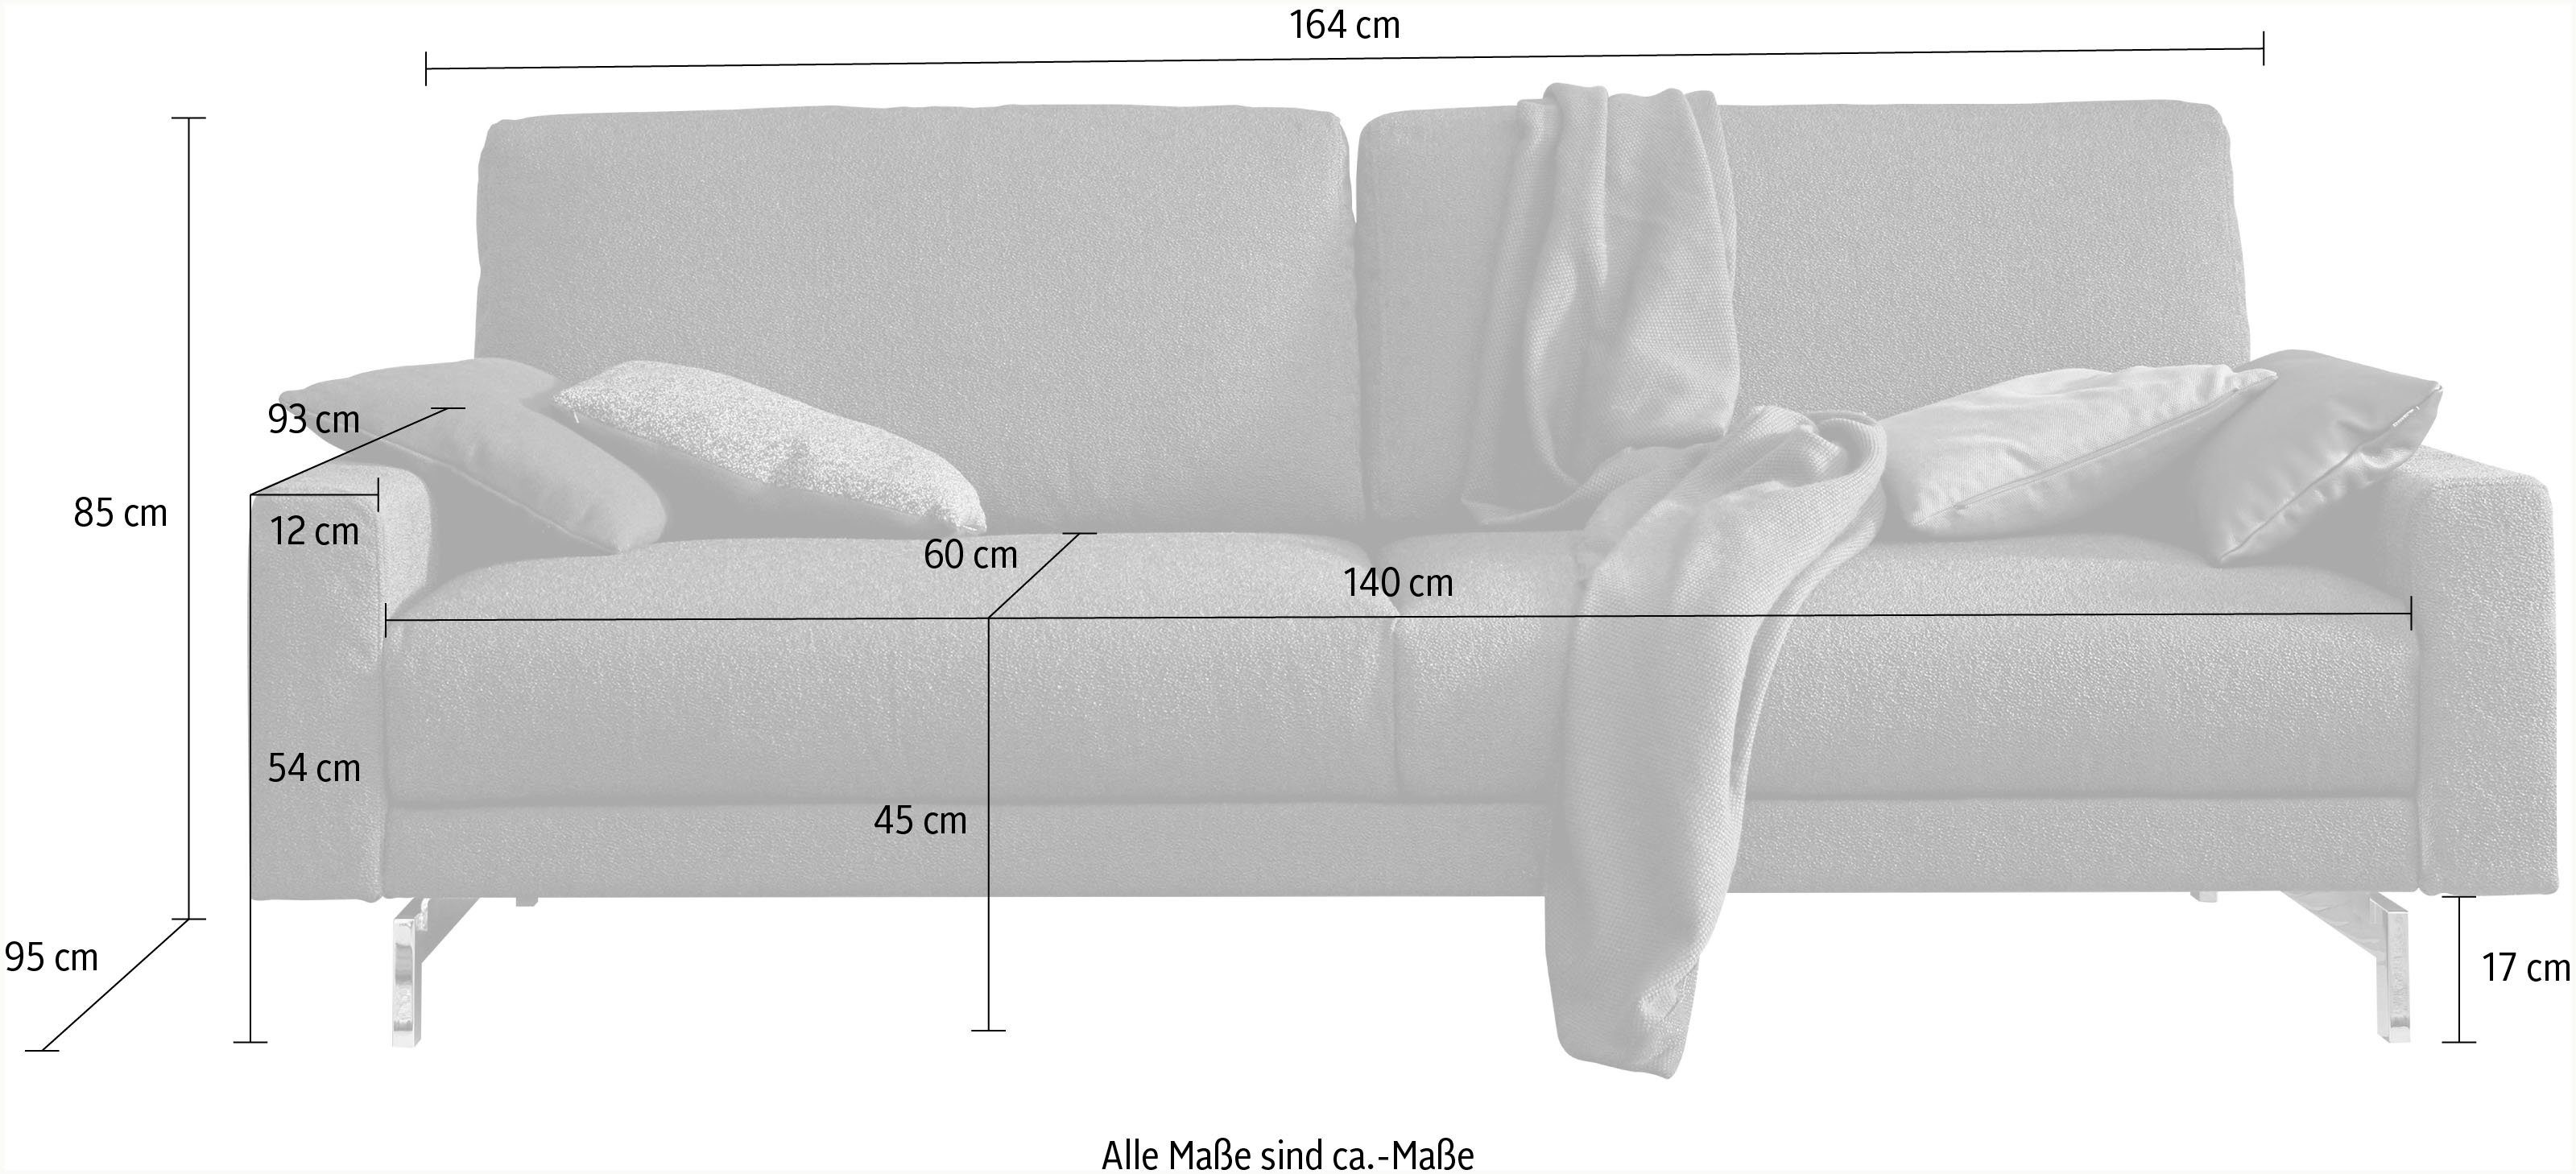 Fuß 164 sofa 2-Sitzer Armlehne niedrig, chromfarben hülsta glänzend, hs.450, cm Breite